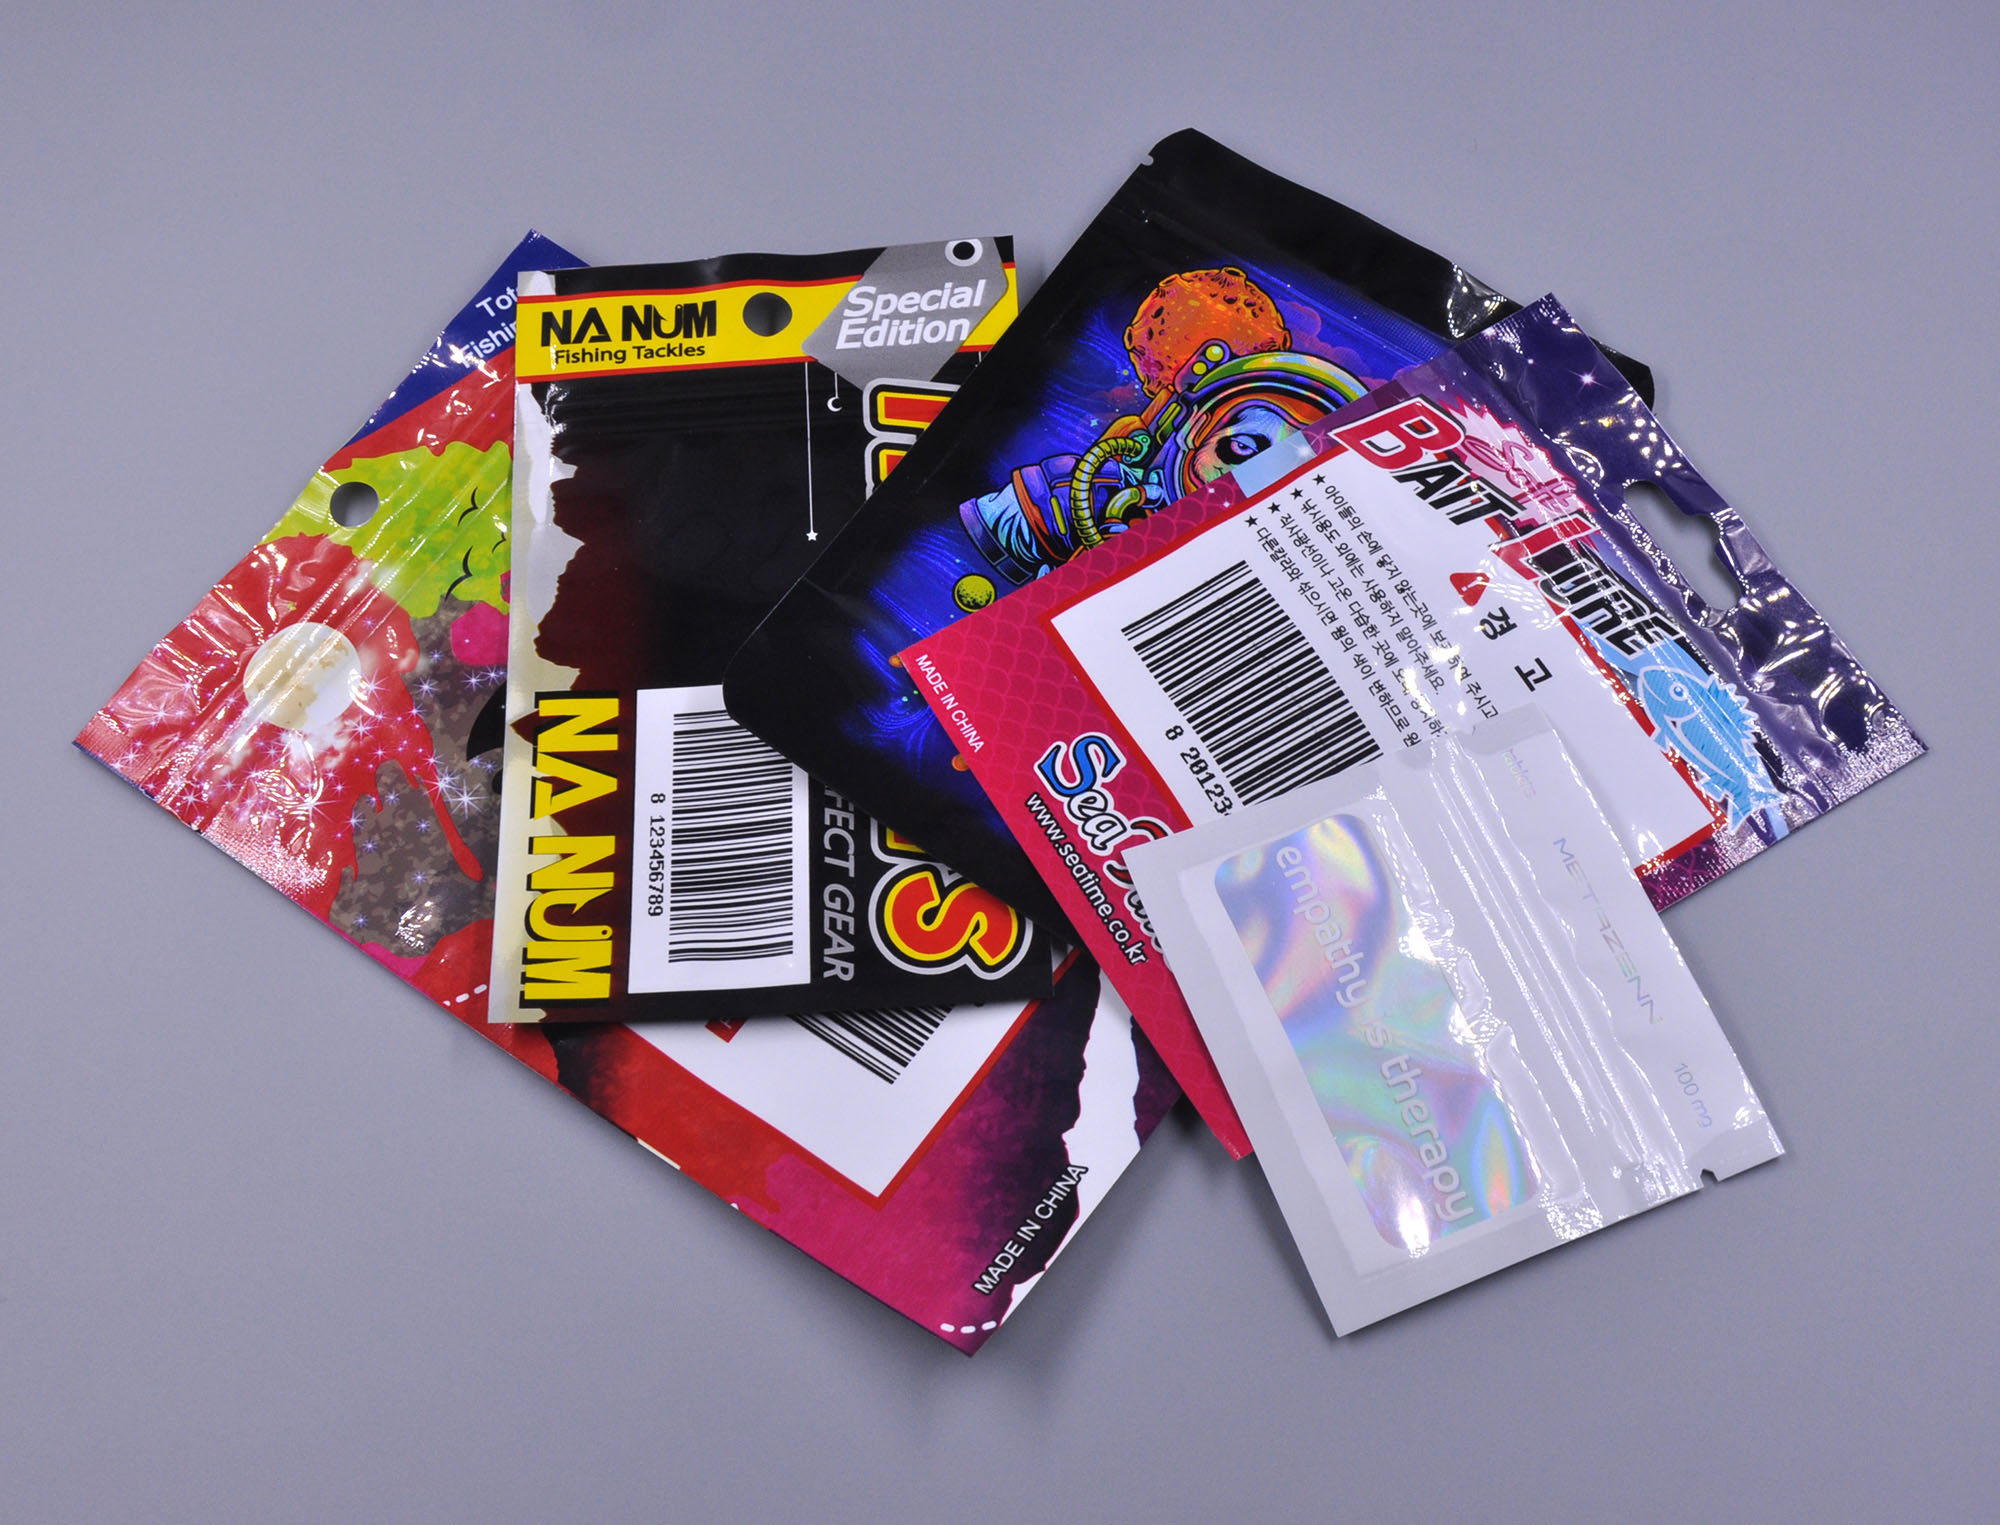 Exemplos de impressão de sacos plásticos ziplock